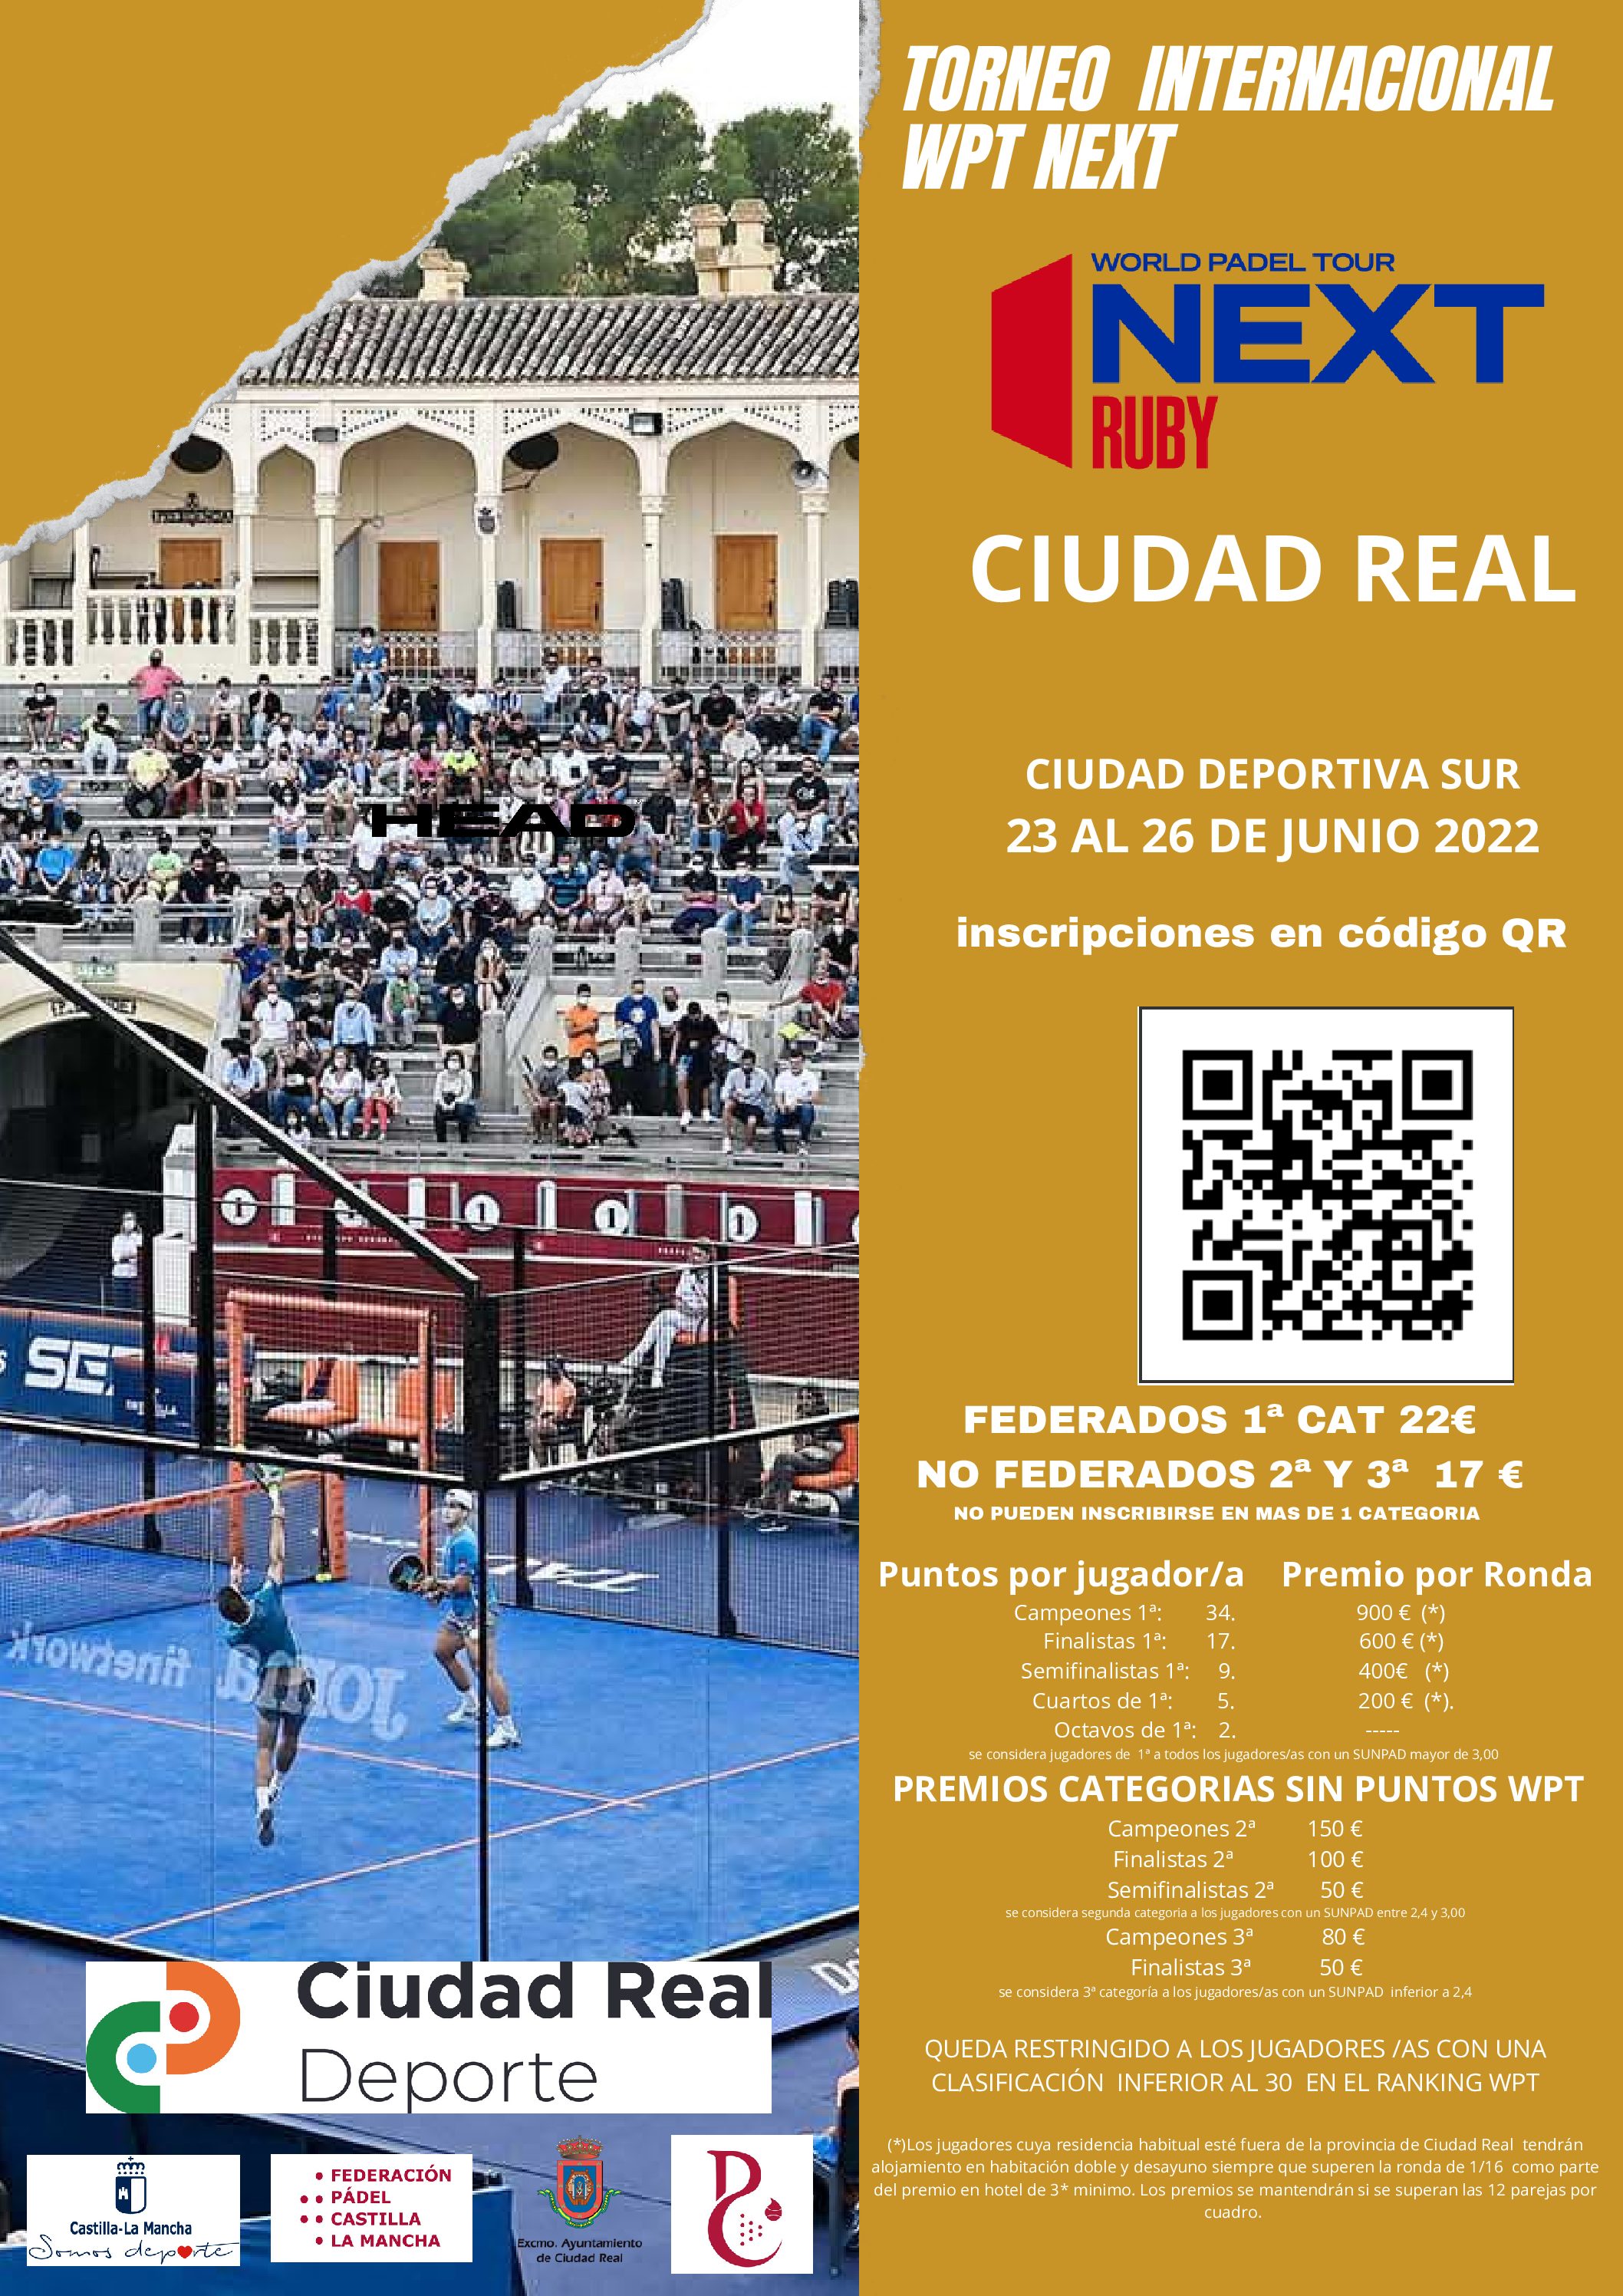 Torneo Internacional World Padel Tour NEXT Ciudad Real Deporte 2022